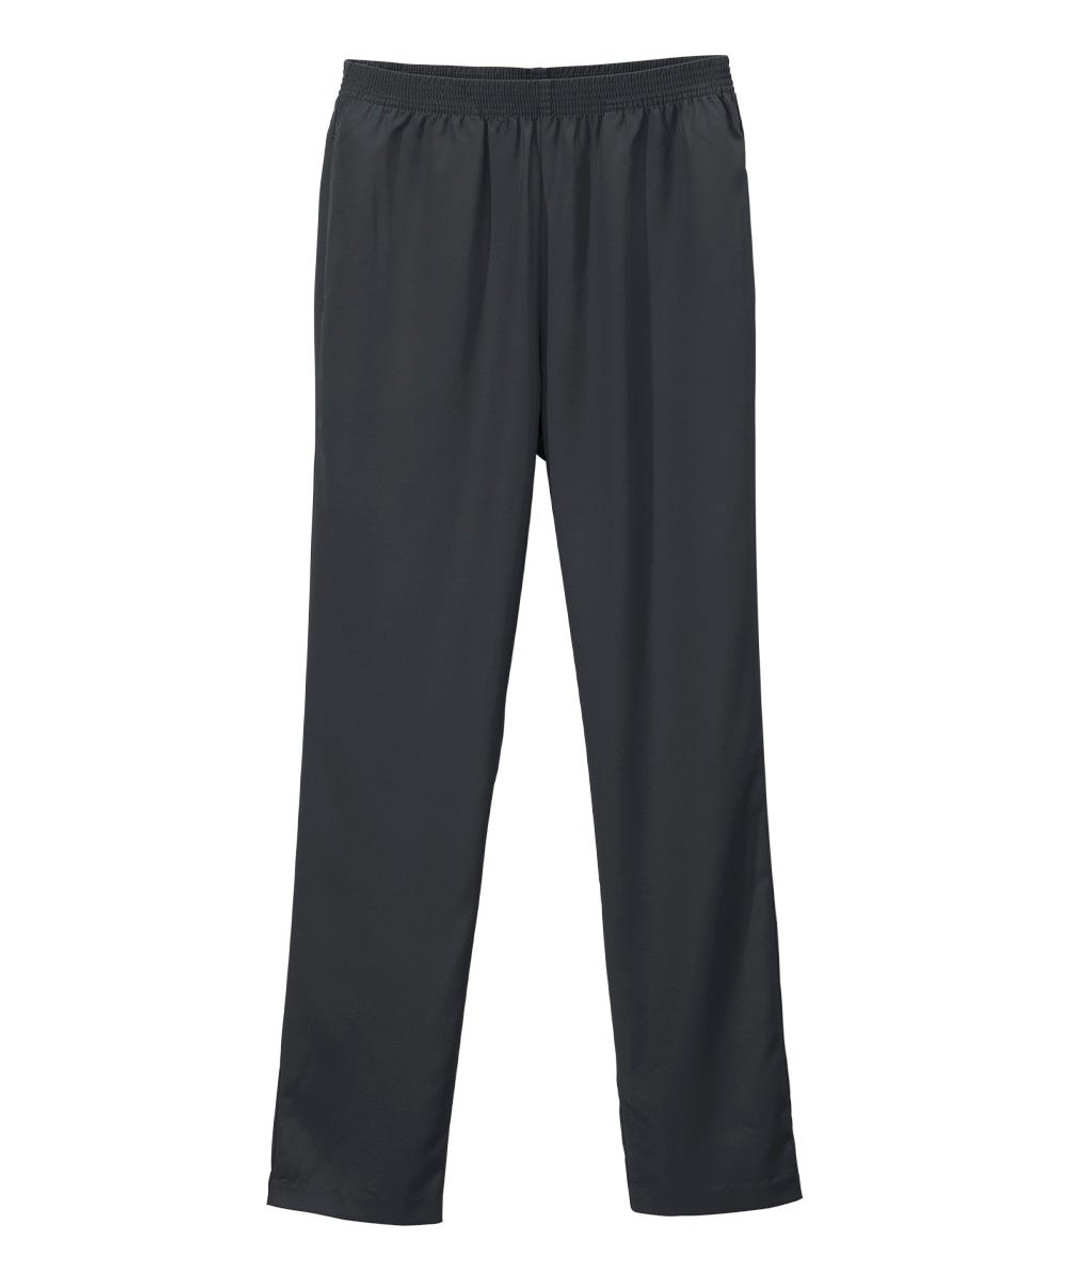 Silverts SV13100 Women's Pull On Pants - Senior Women's Pull-on Petite Gabardine Pant Black, Size=20P, SV13100-BLK-20P